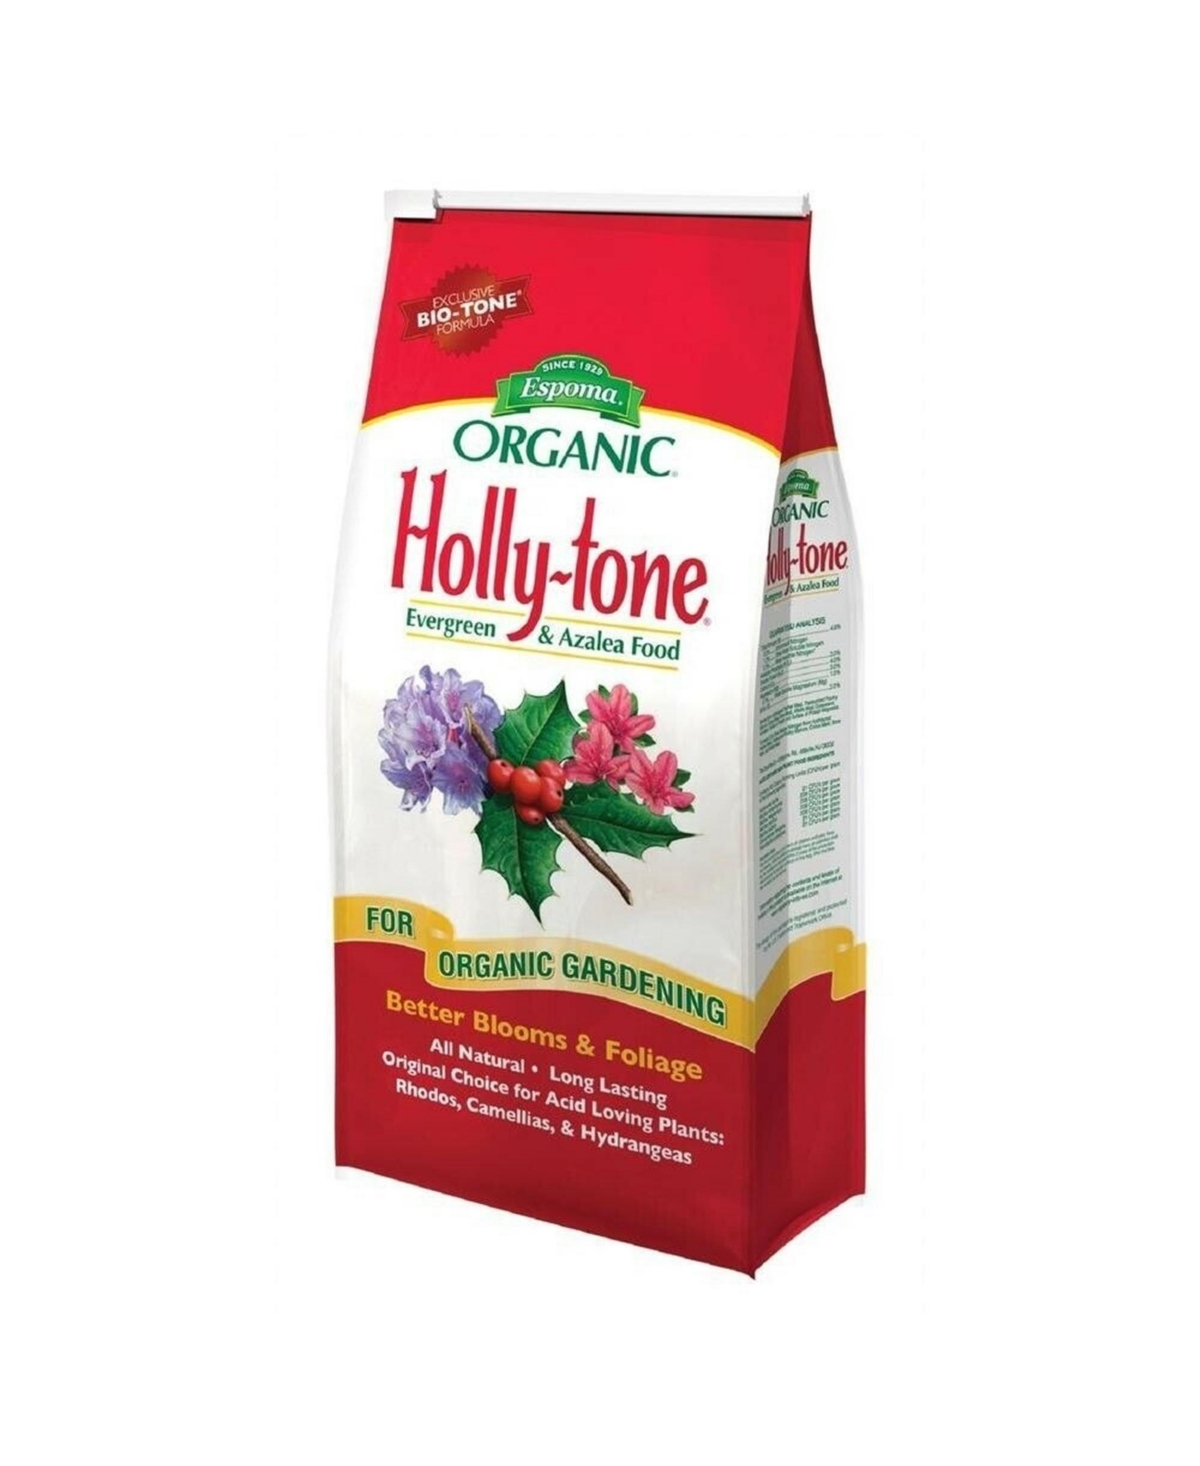 Holly-Tone Evergreen and Azalea Food 4-3-4, 8lb Bag - Brown